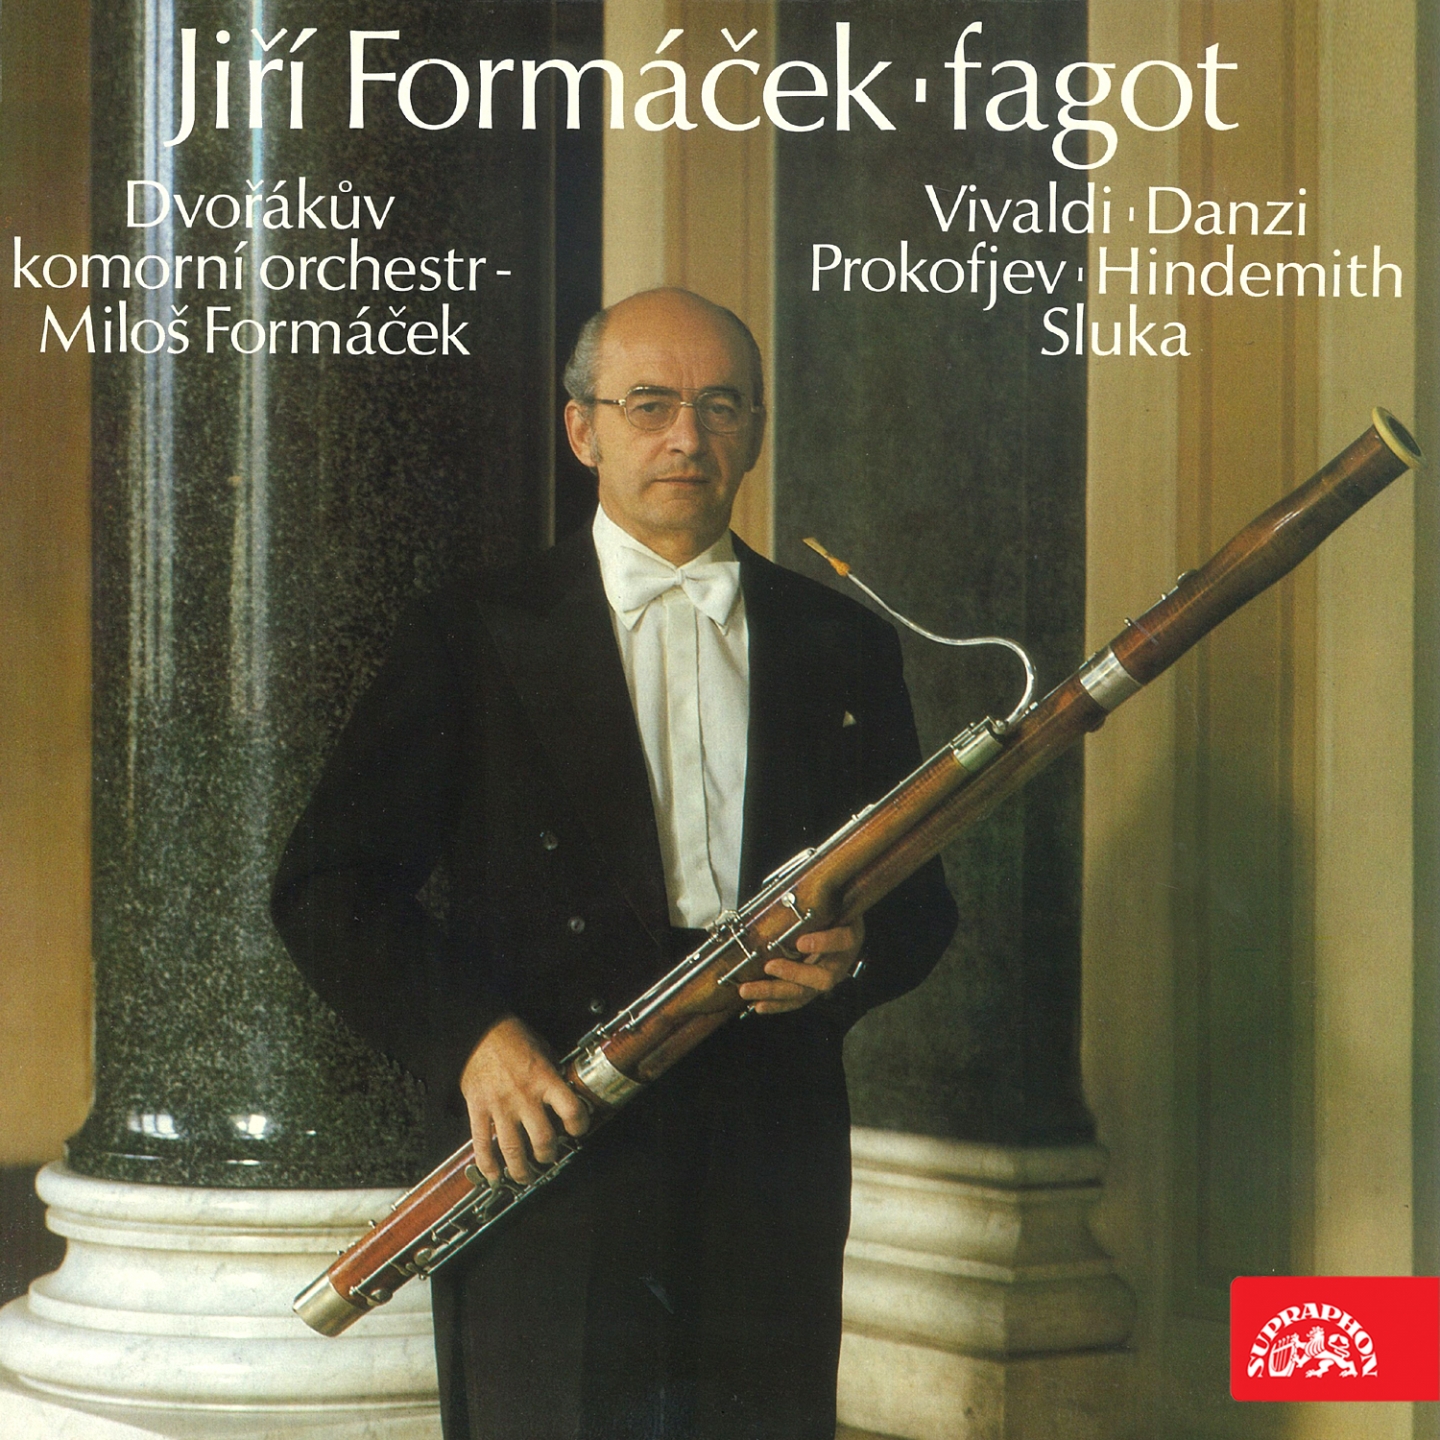 Vivaldi, Danzi, Prokofiev, Hindemith & Sluka: Fagot